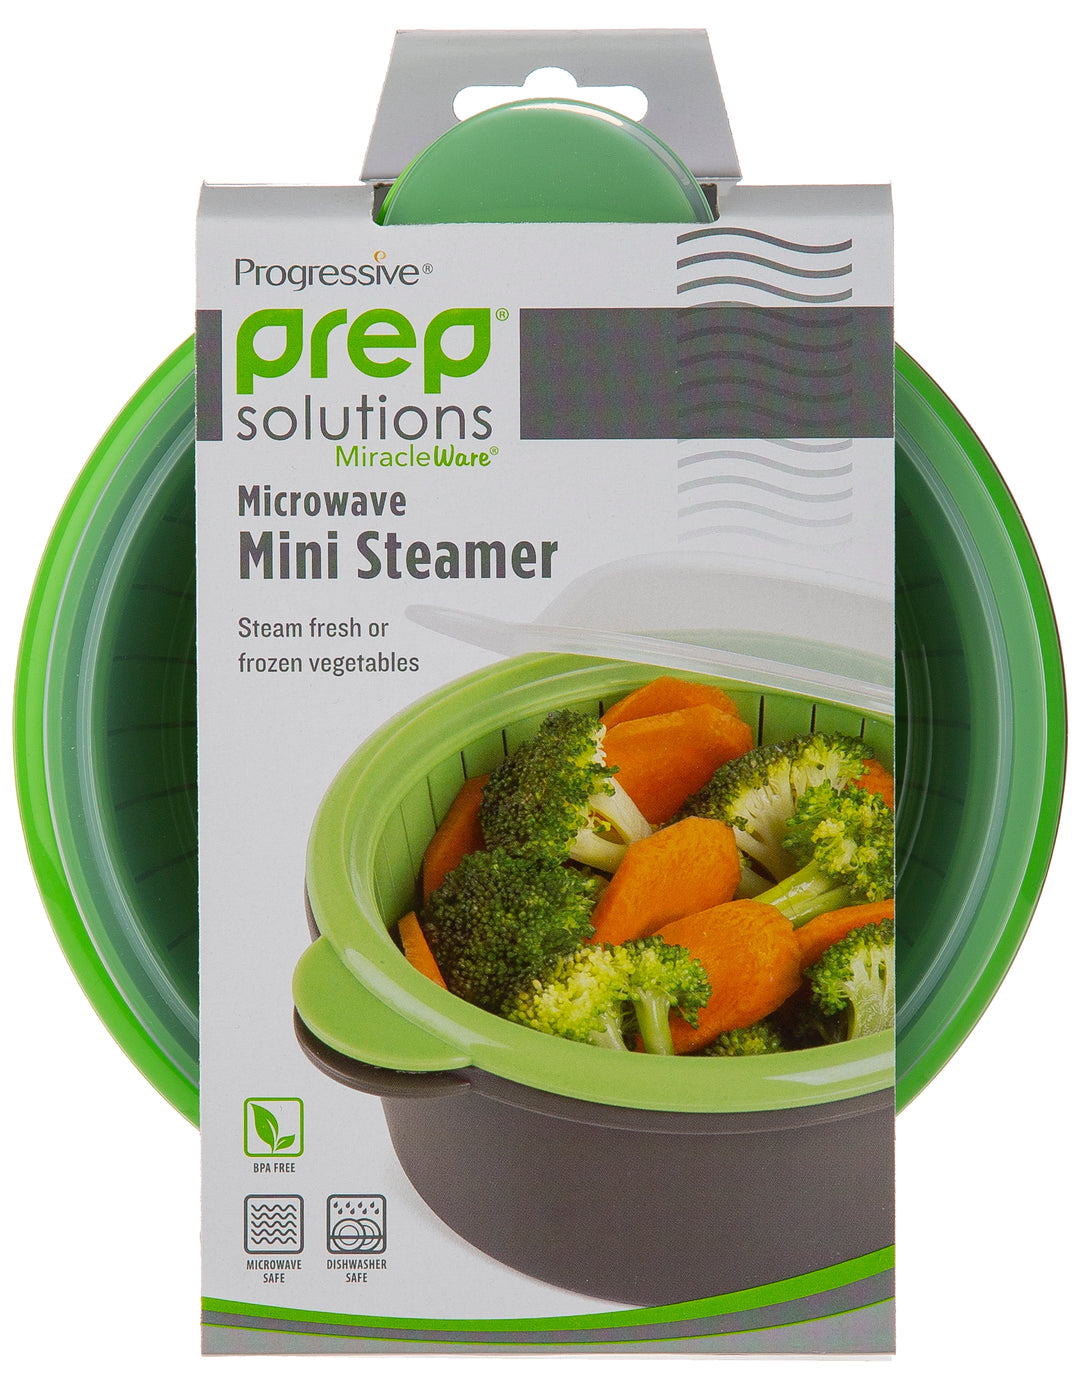 Microwave Mini Steamer by Progressive